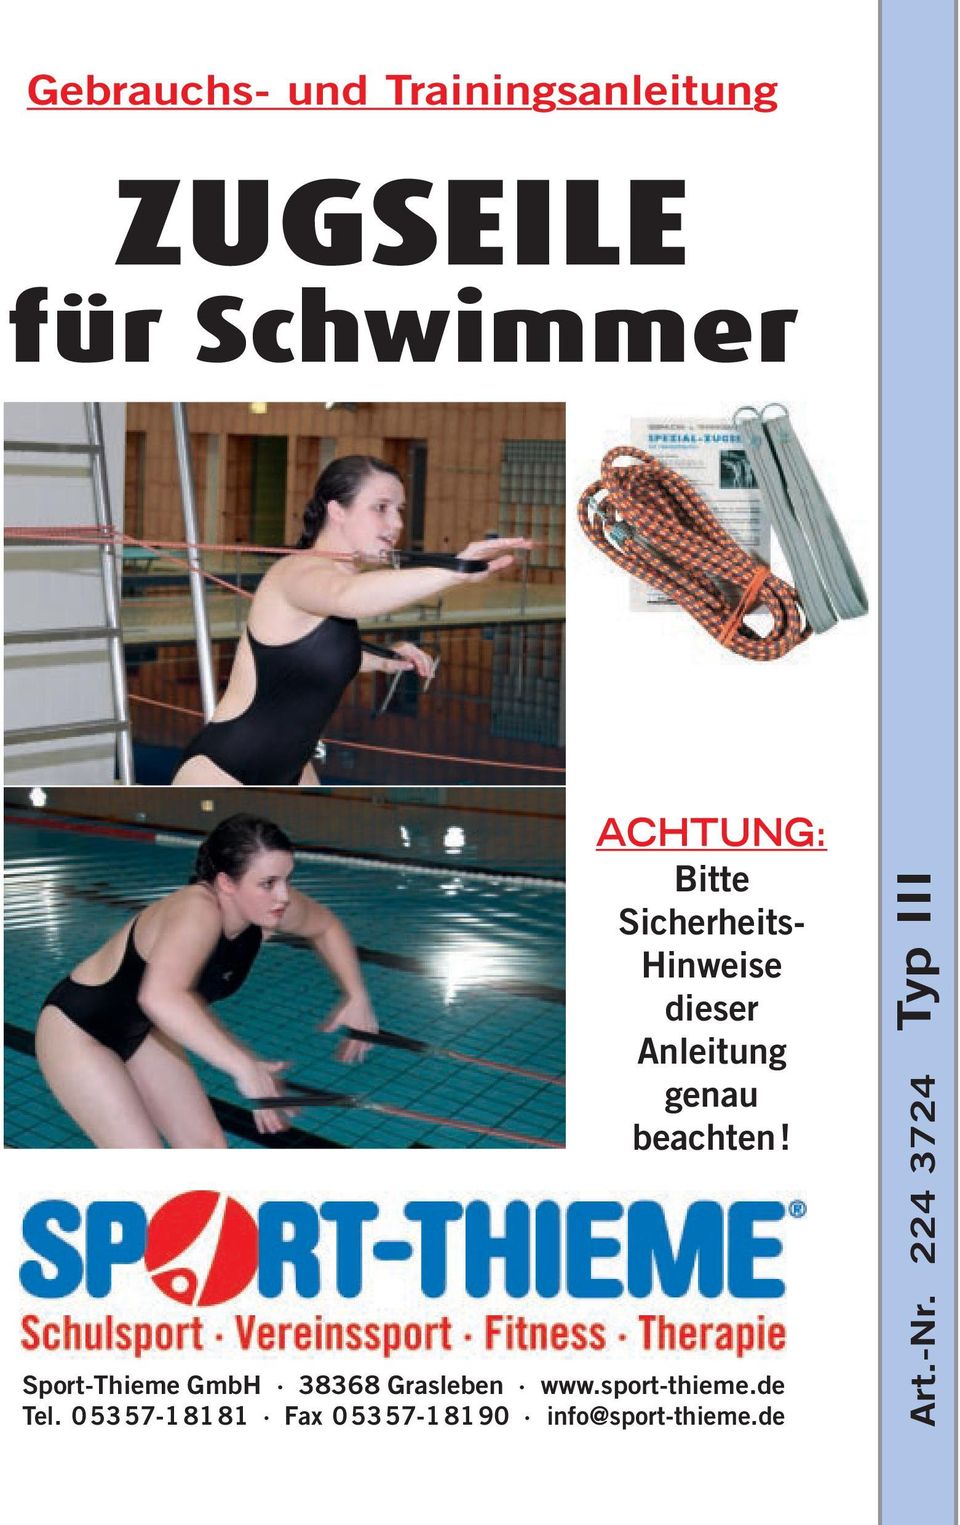 Sport-Thieme GmbH 38368 Grasleben www.sport-thieme.de Tel.